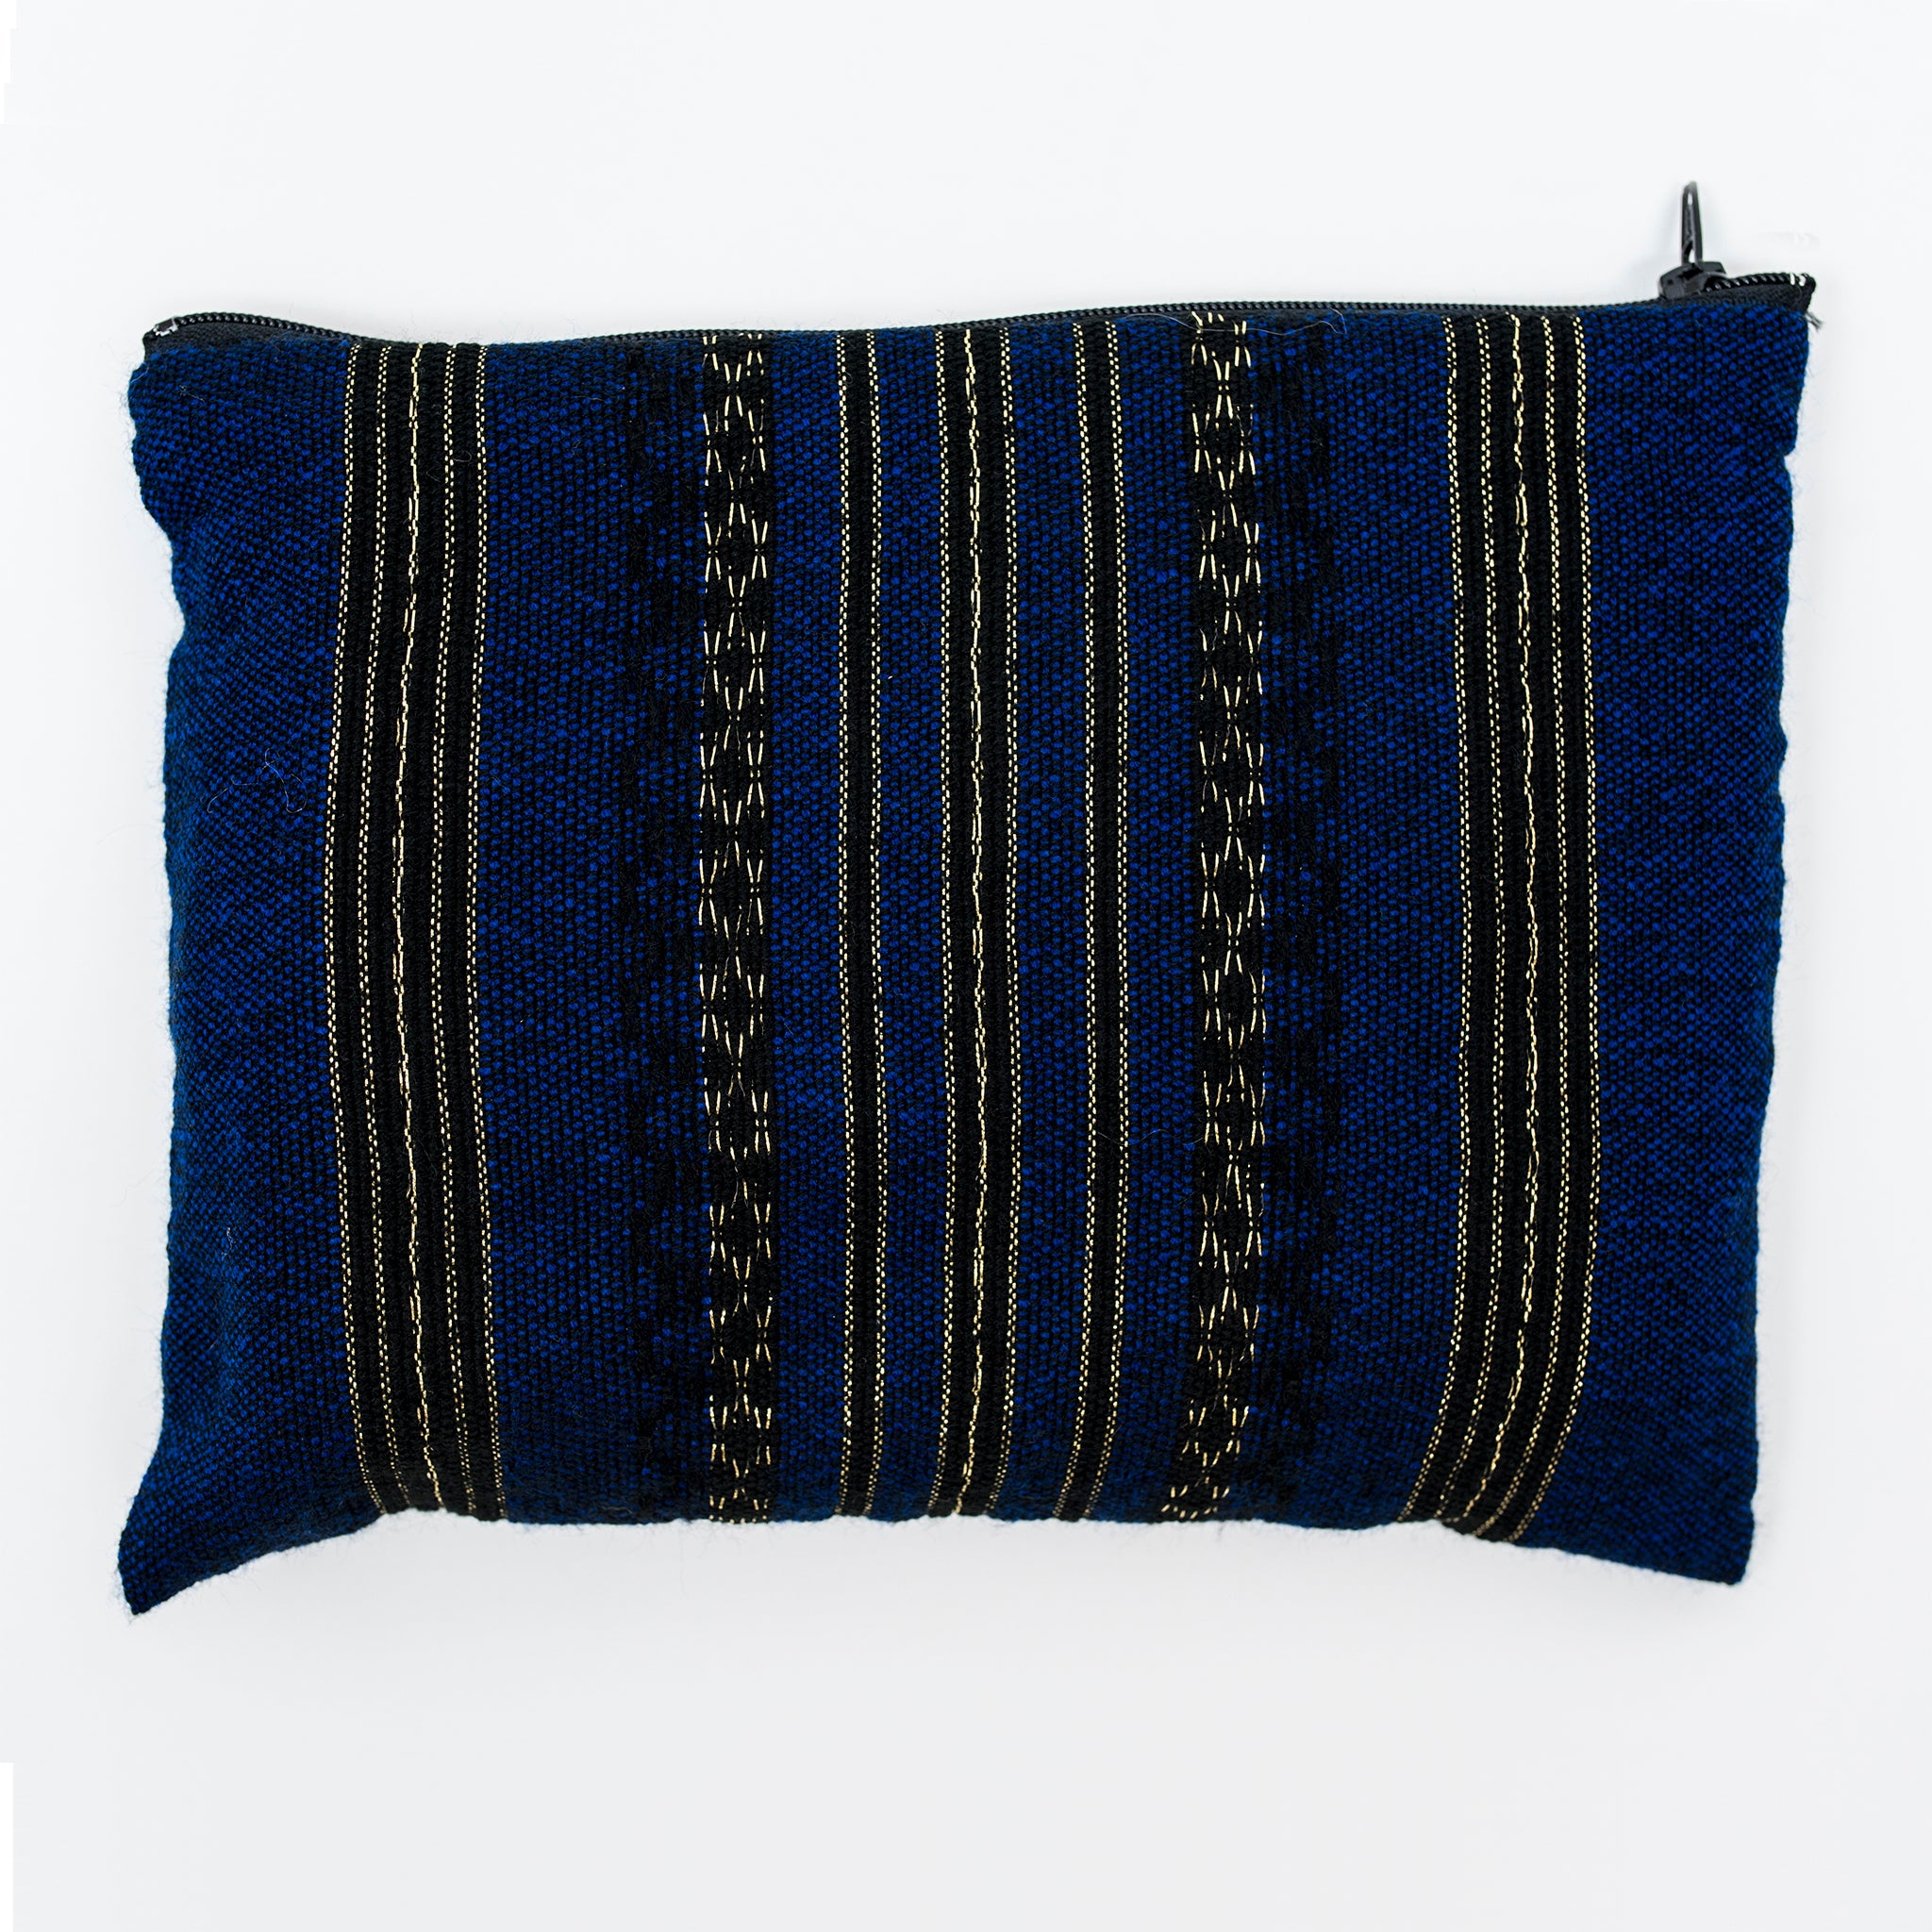 Hagar - Wool Tallit - Black and Gold on Blue